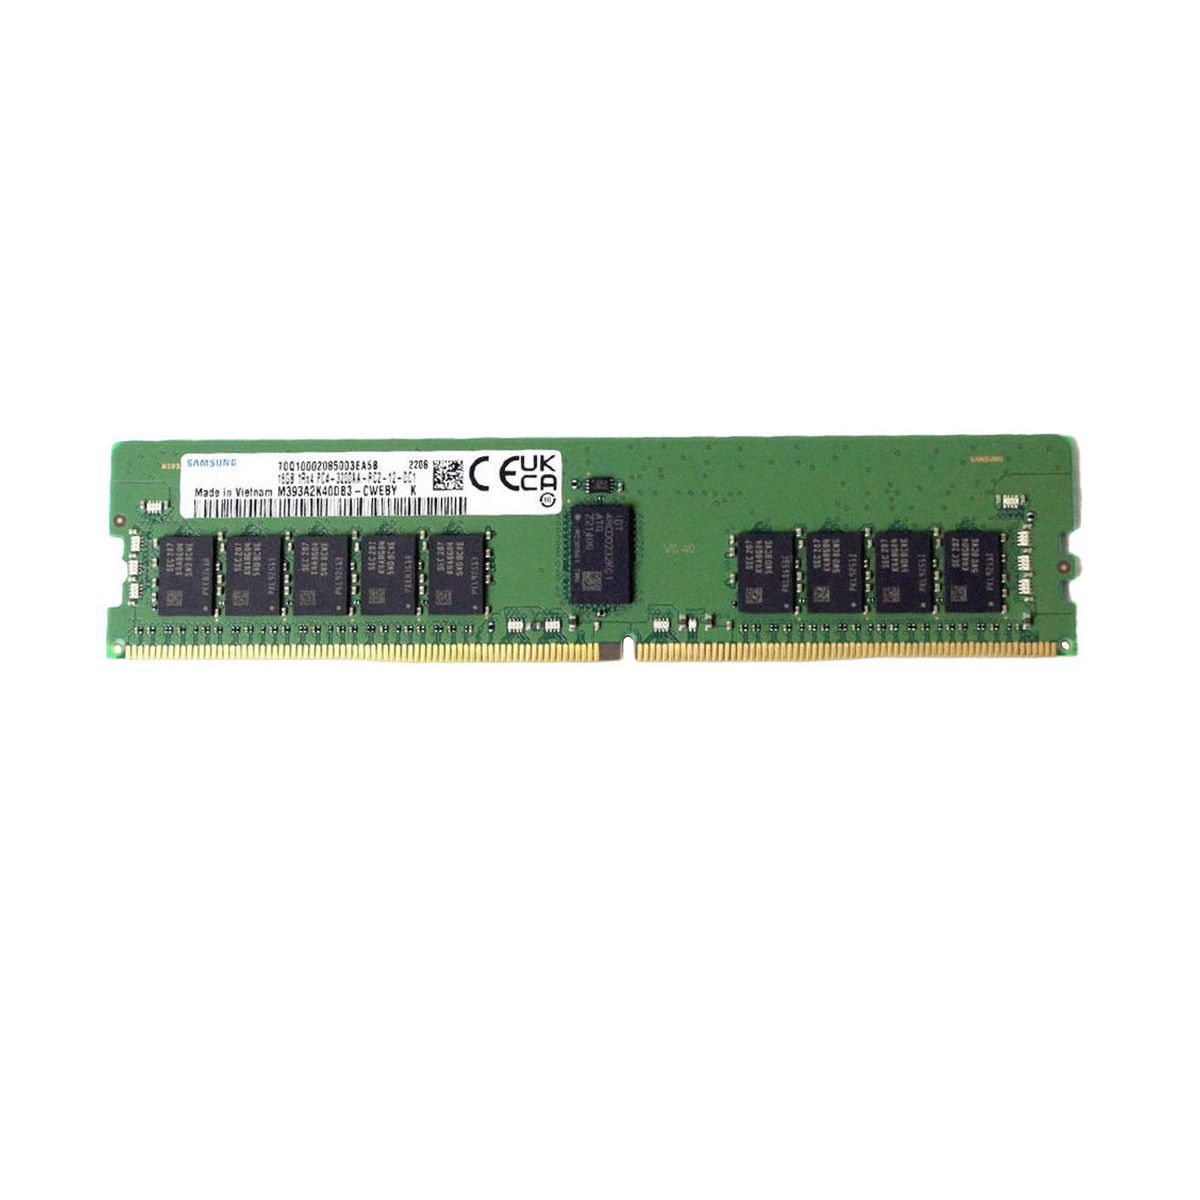 UCSX-MR-X16G1RW-MS - Memstar 1x 16GB DDR4-3200 RDIMM PC4-25600R - OEM compatible con Mem-Star Memoria 1 - Memstar 